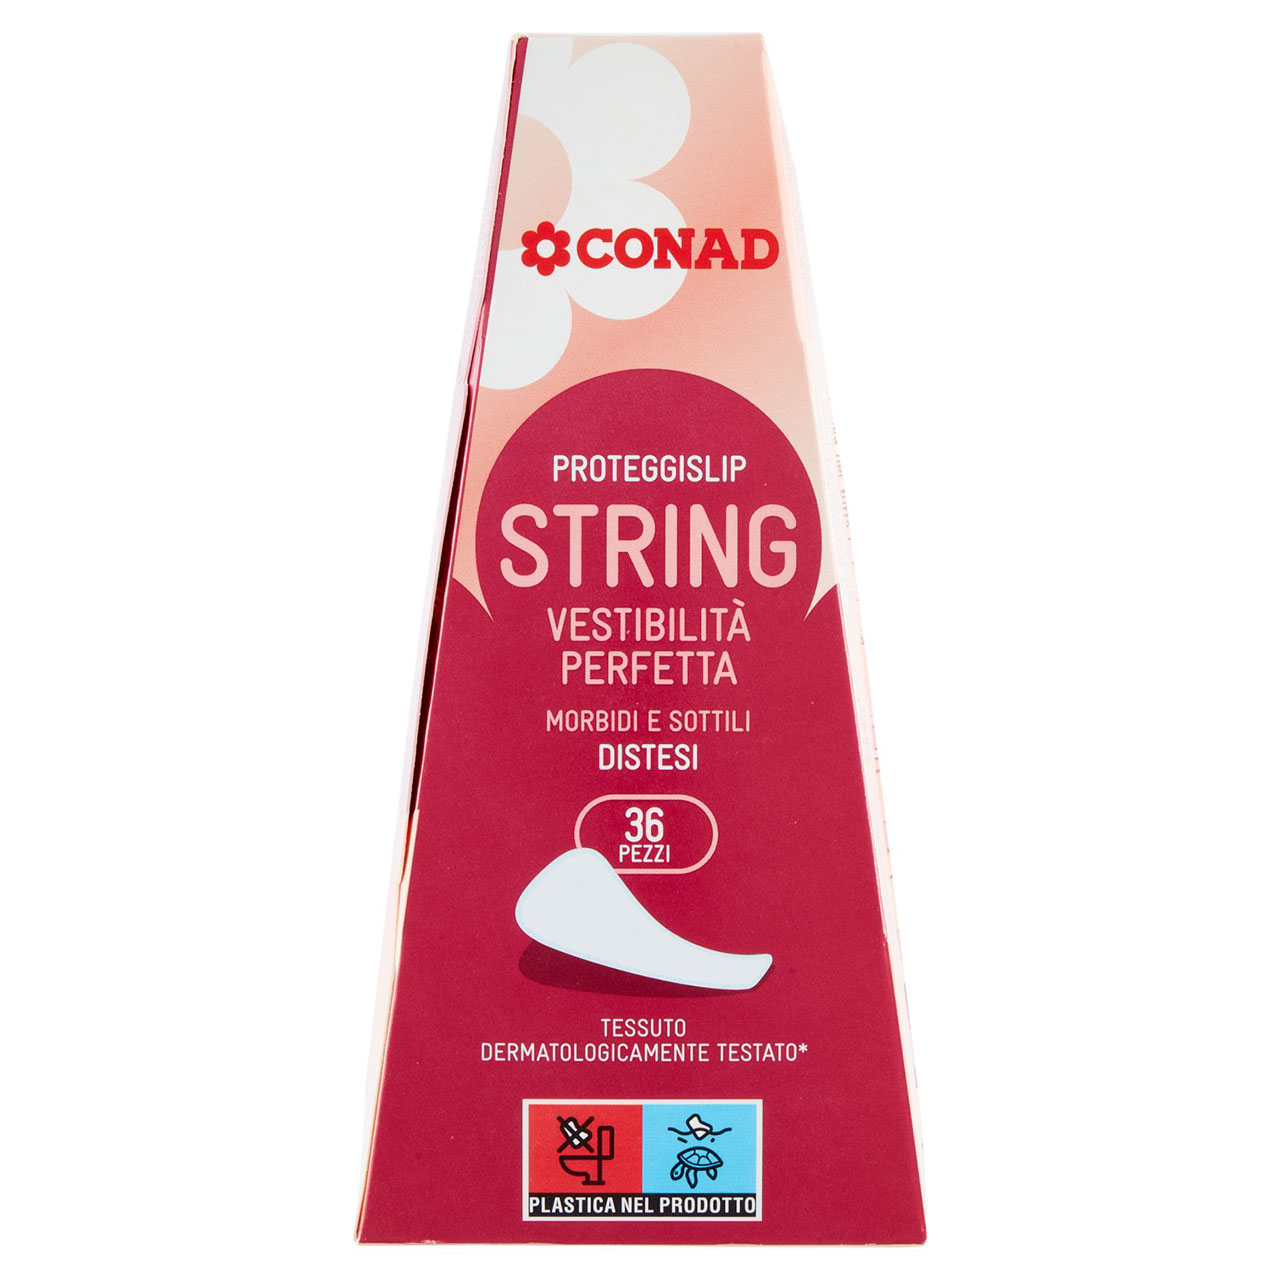 CONAD Proteggislip String Distesi 36 pz